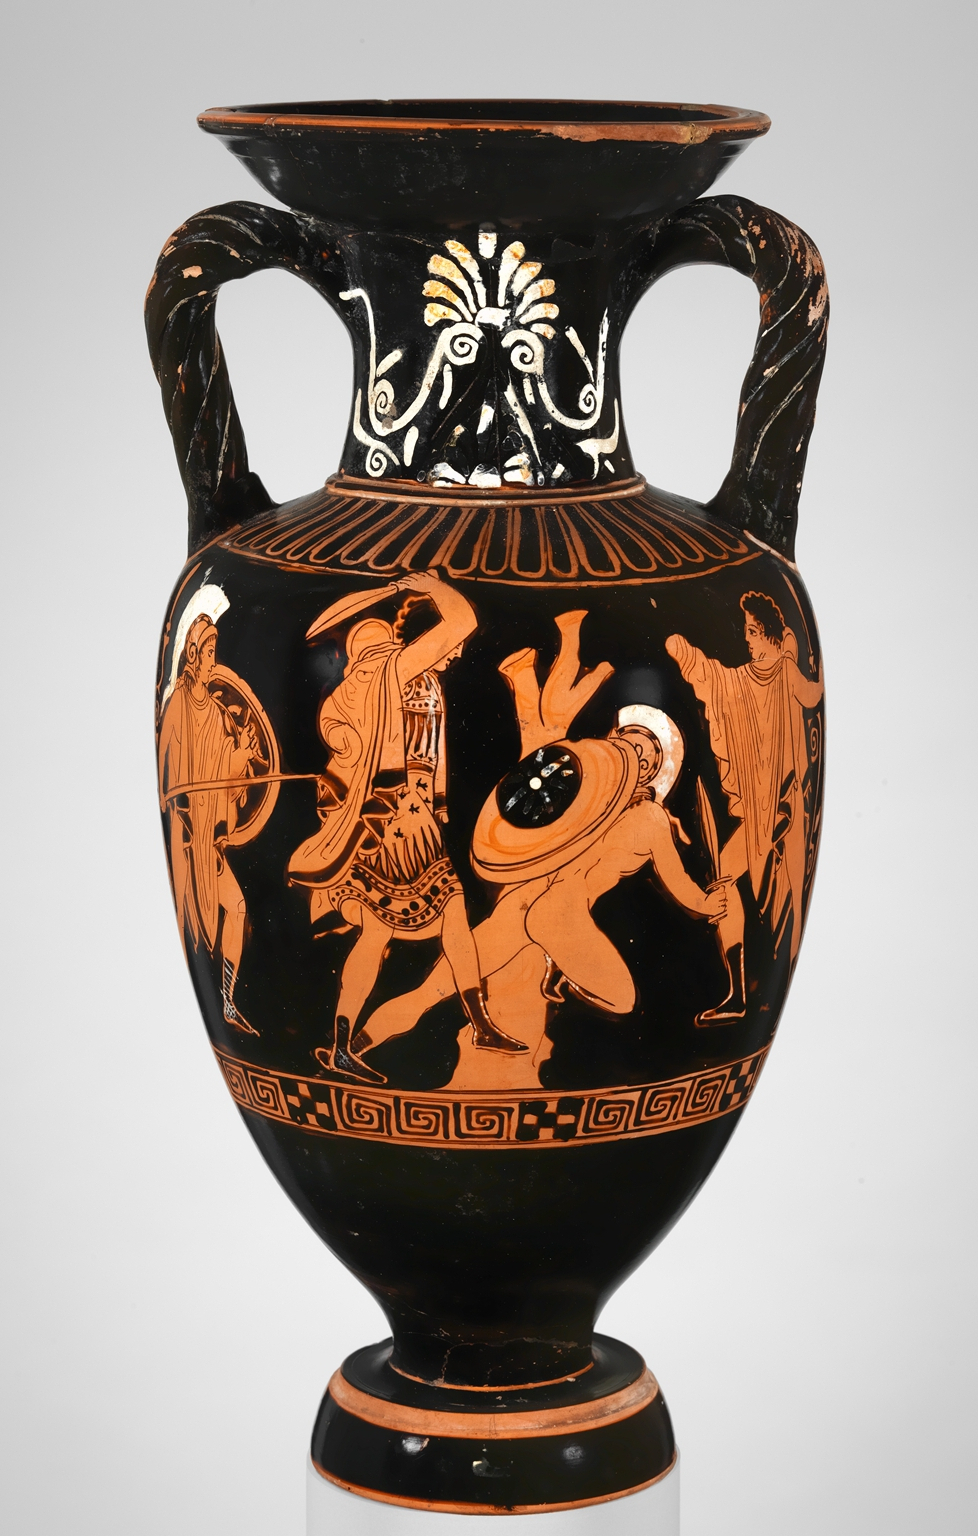 Vase painting: Greeks fighting Amazons